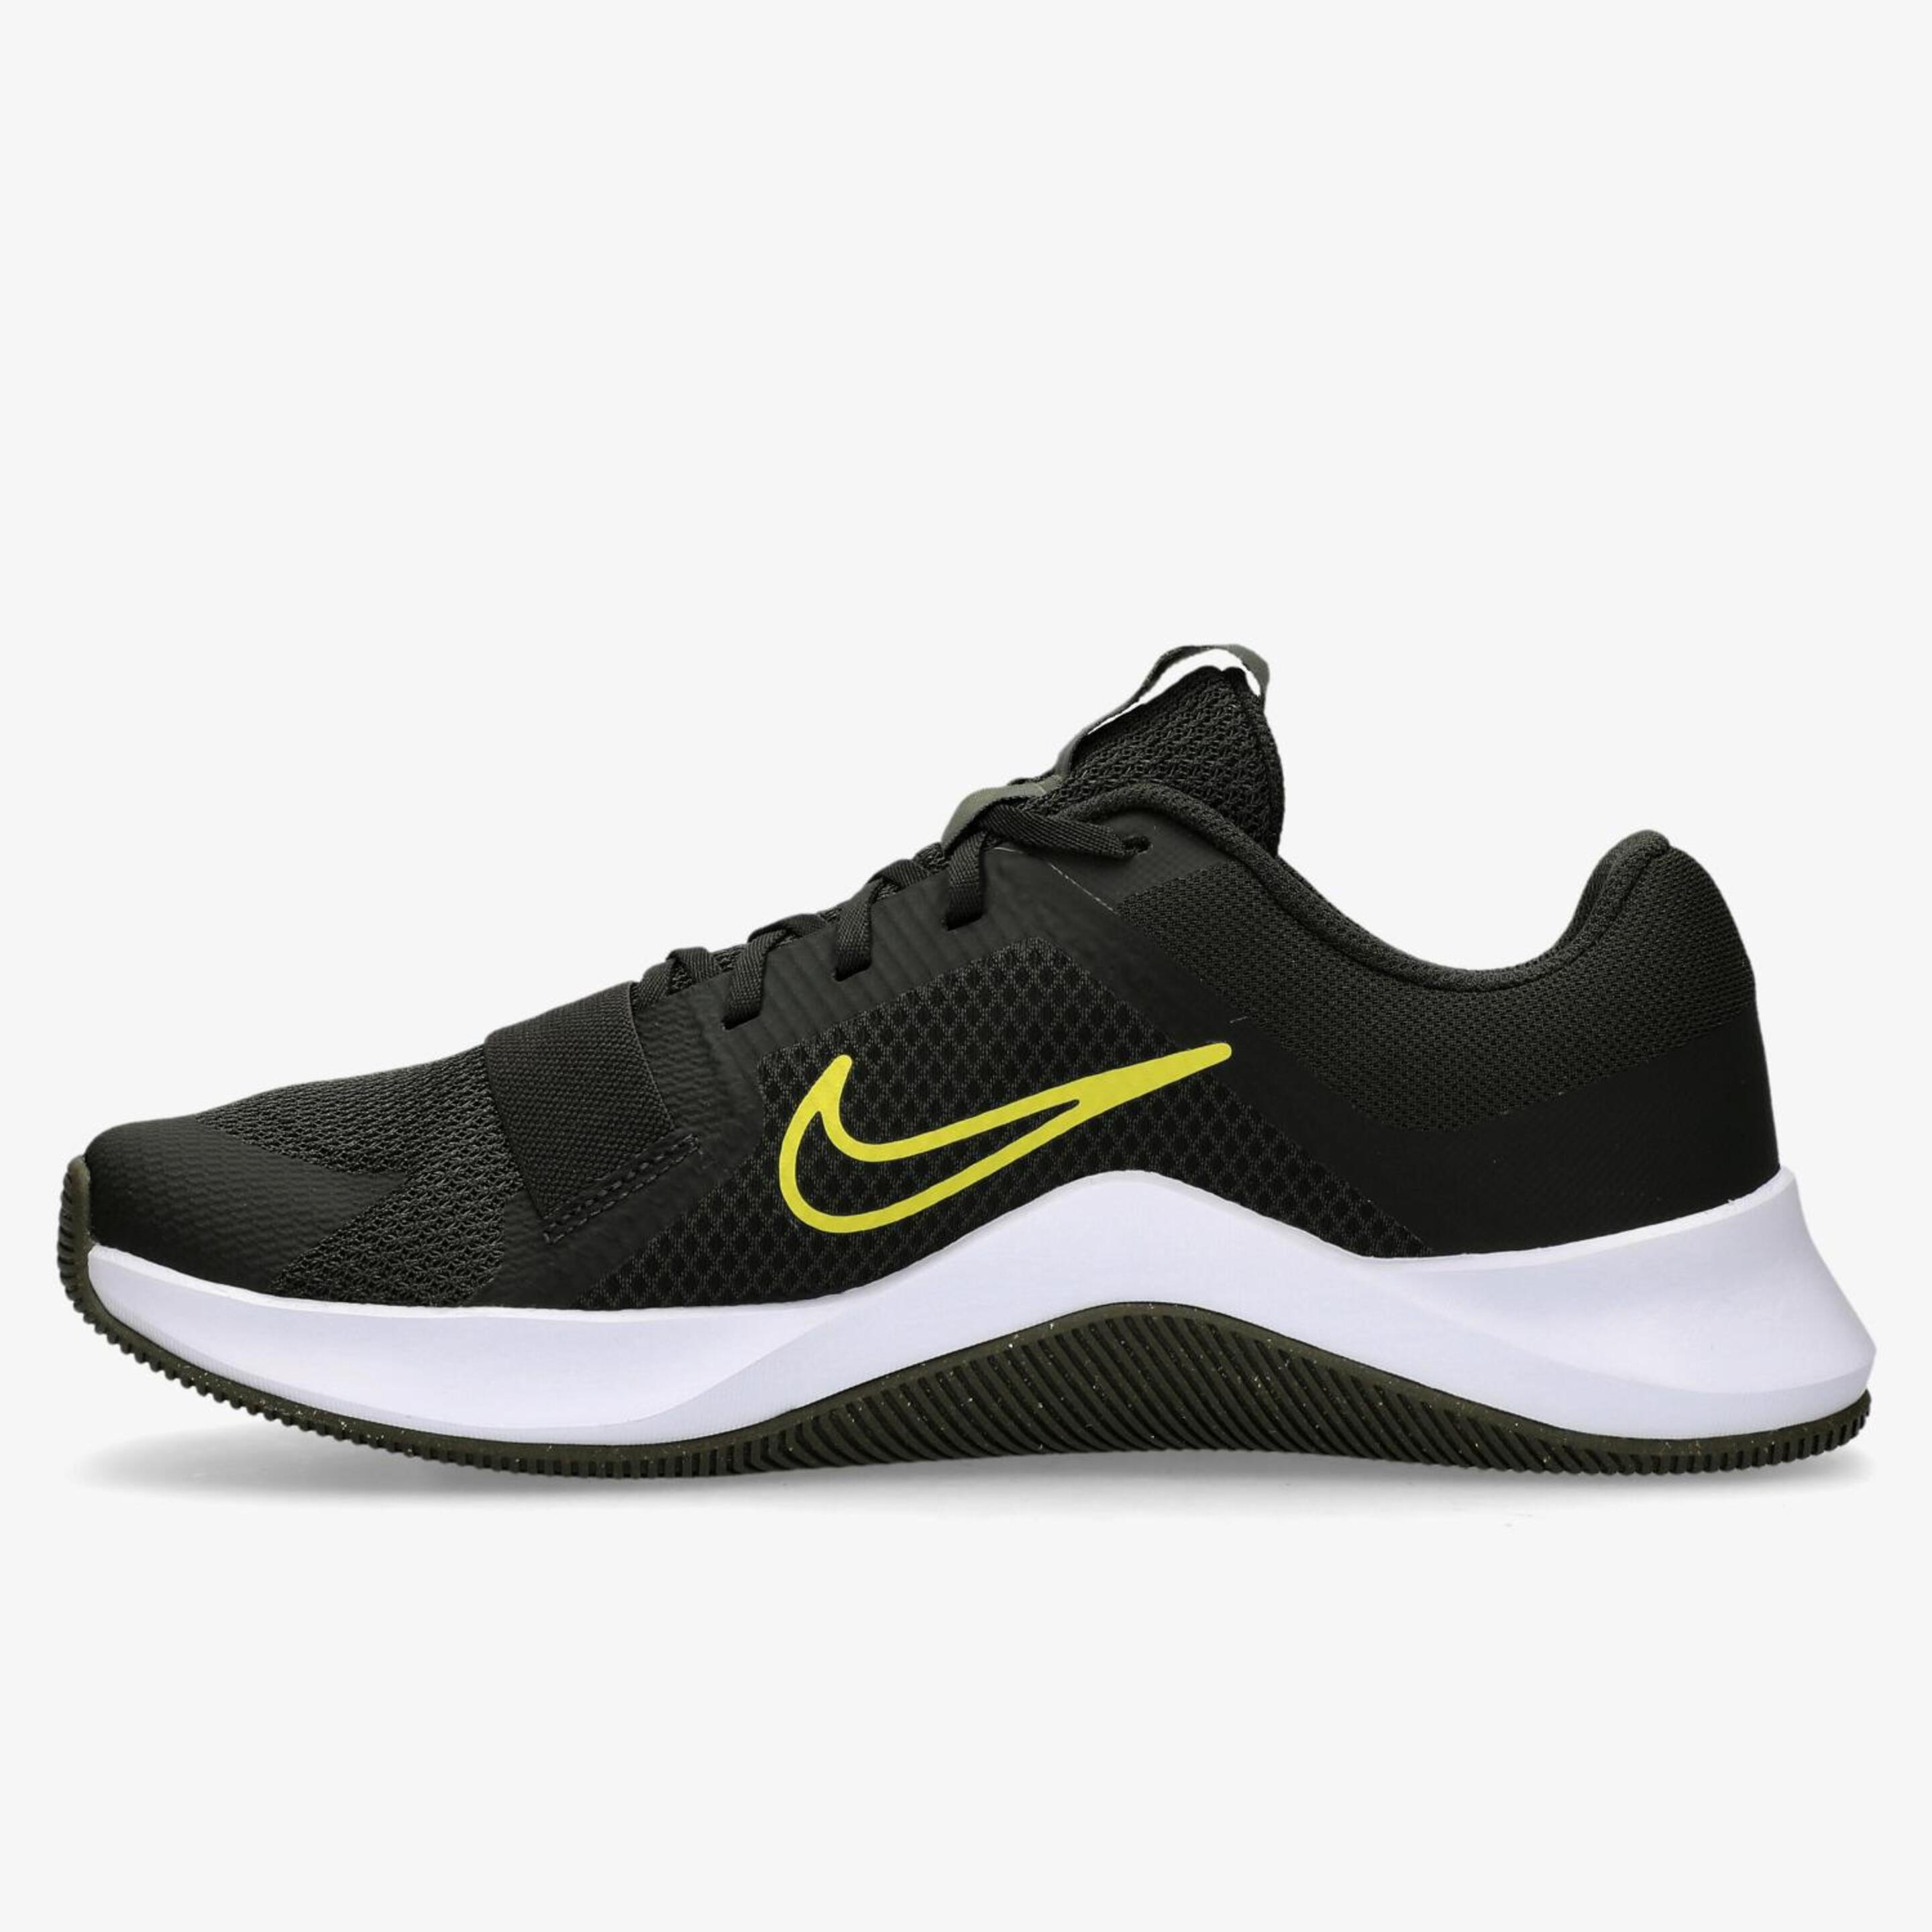 Nike Mc Trainer 2